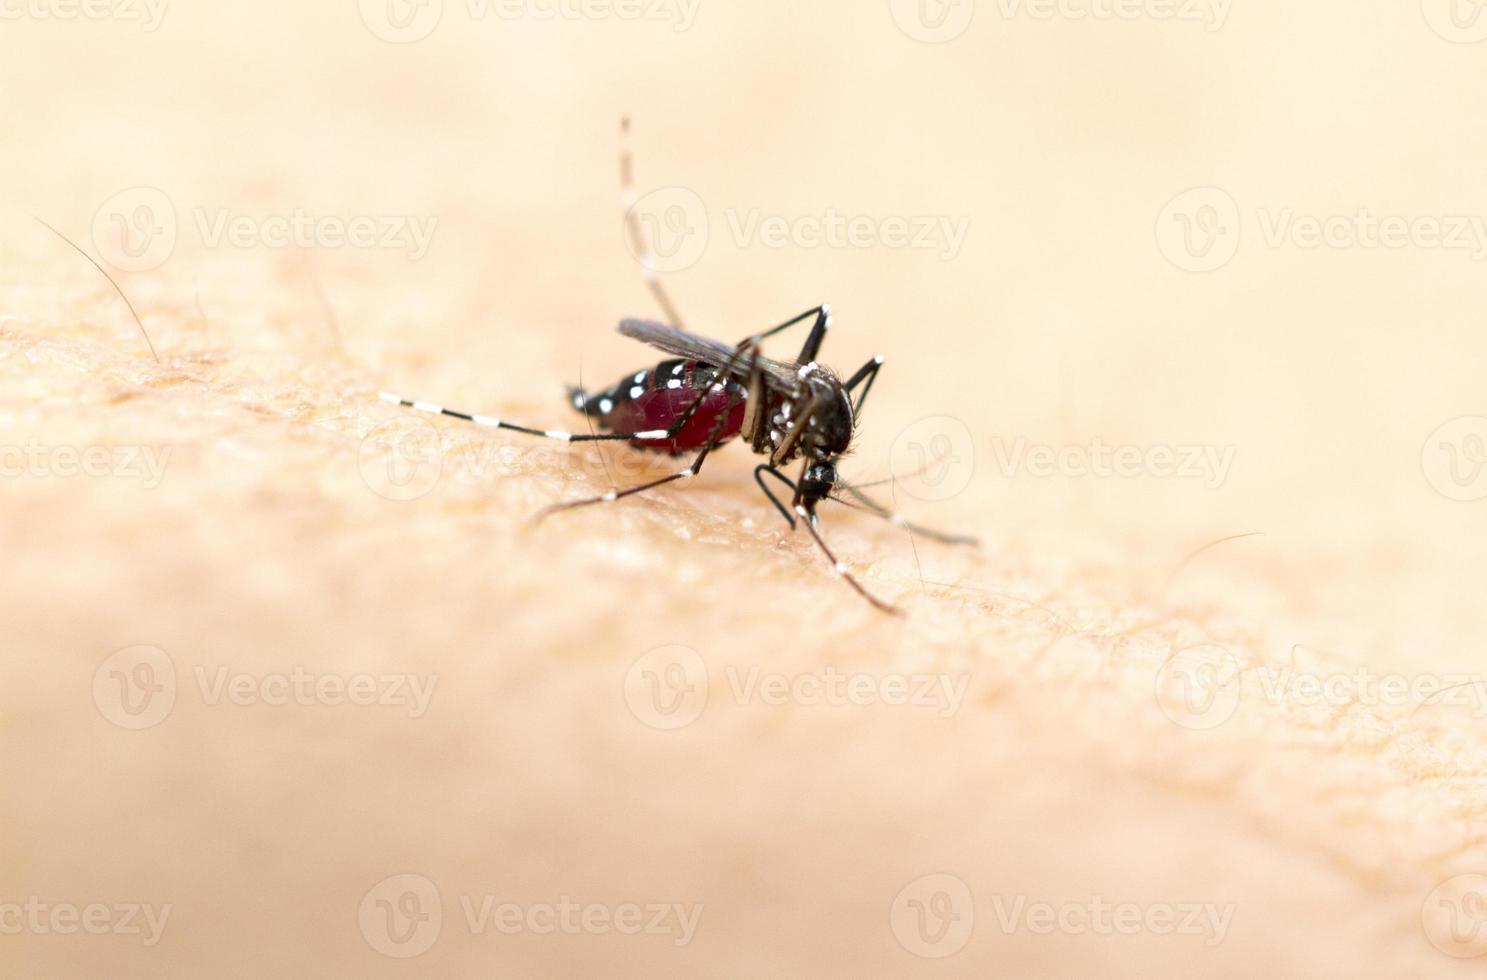 Mosquito on human skin photo